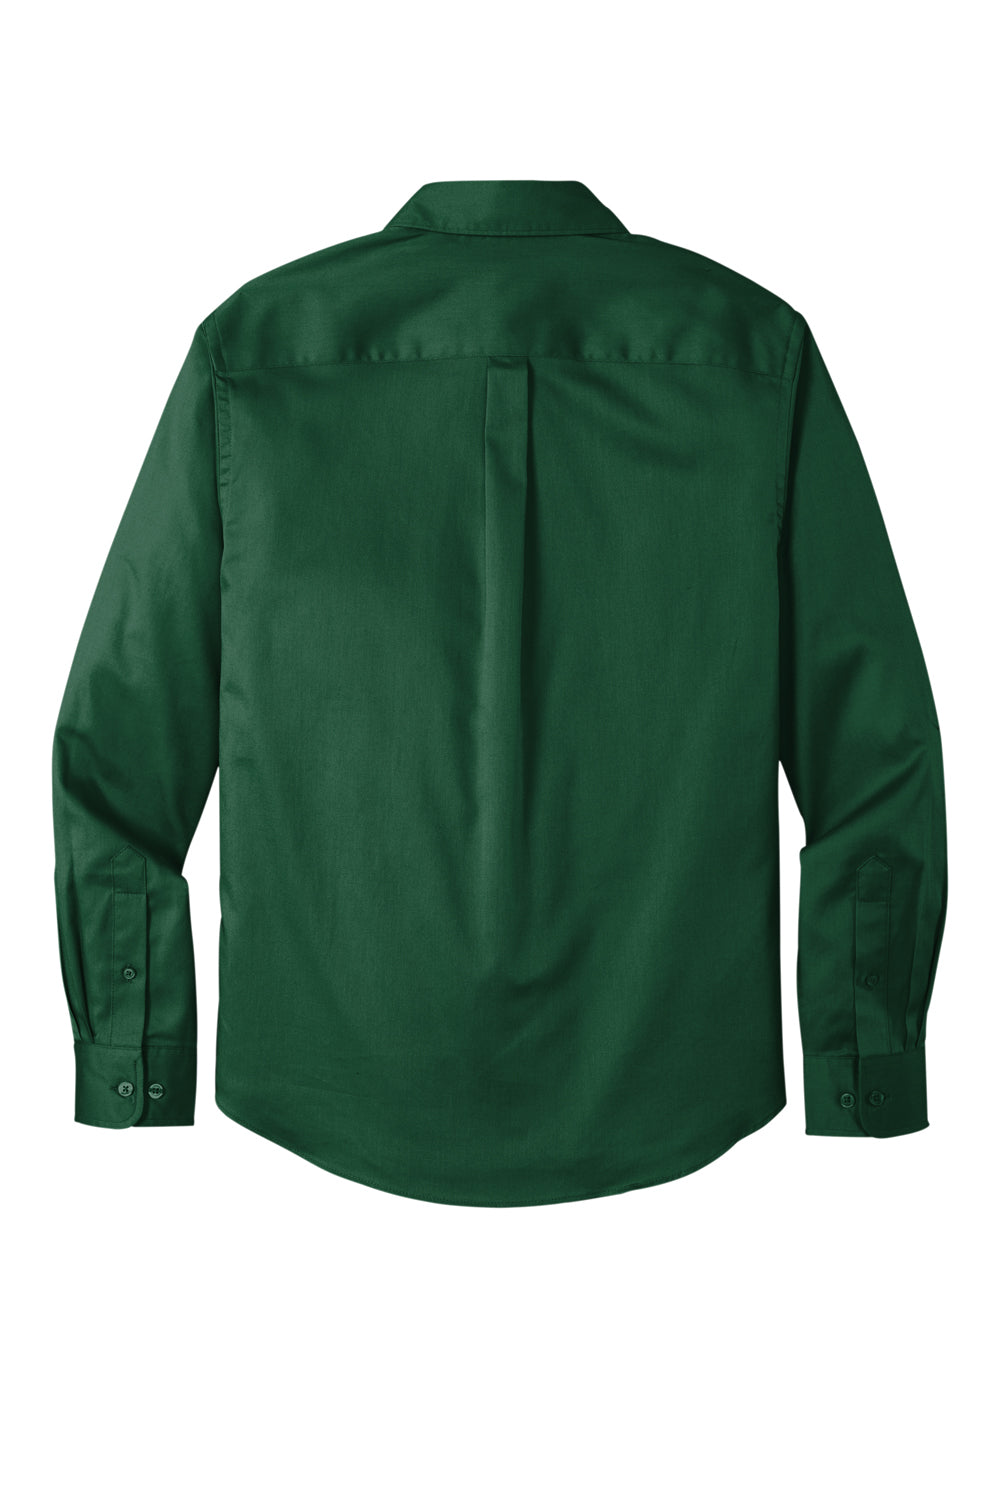 Port Authority W808 SuperPro Wrinkle Resistant React Long Sleeve Button Down Shirt w/ Pocket Dark Green Flat Back